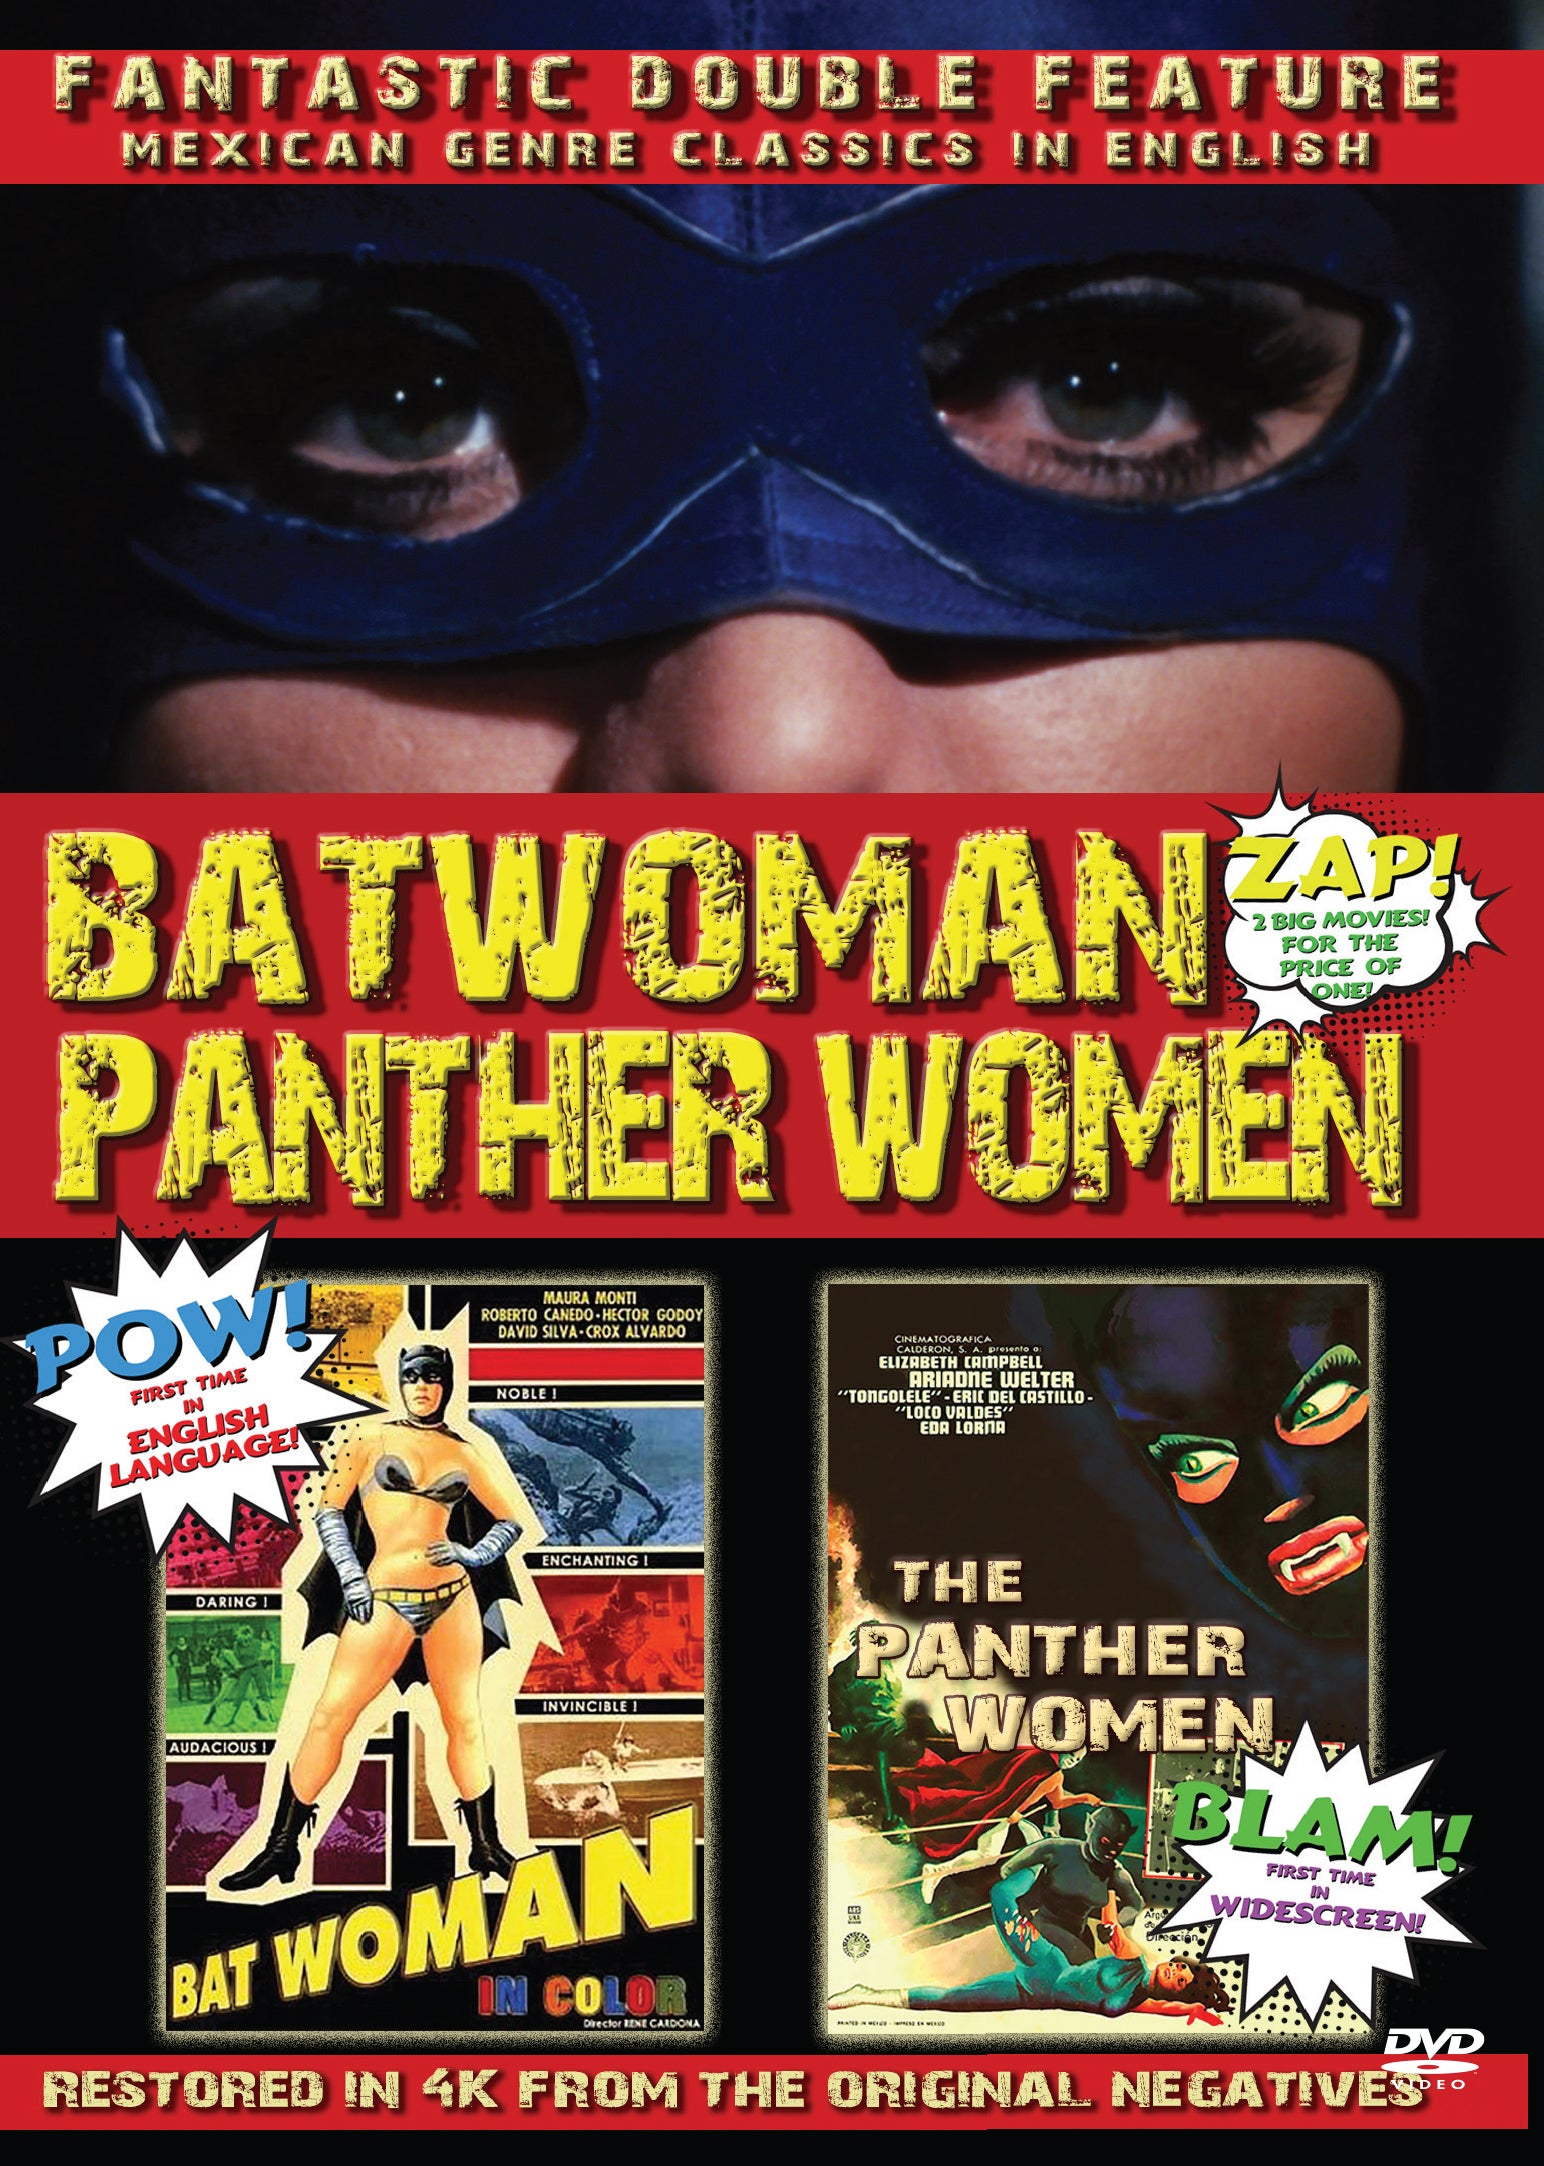 BATWOMAN / THE PANTHER WOMEN DVD